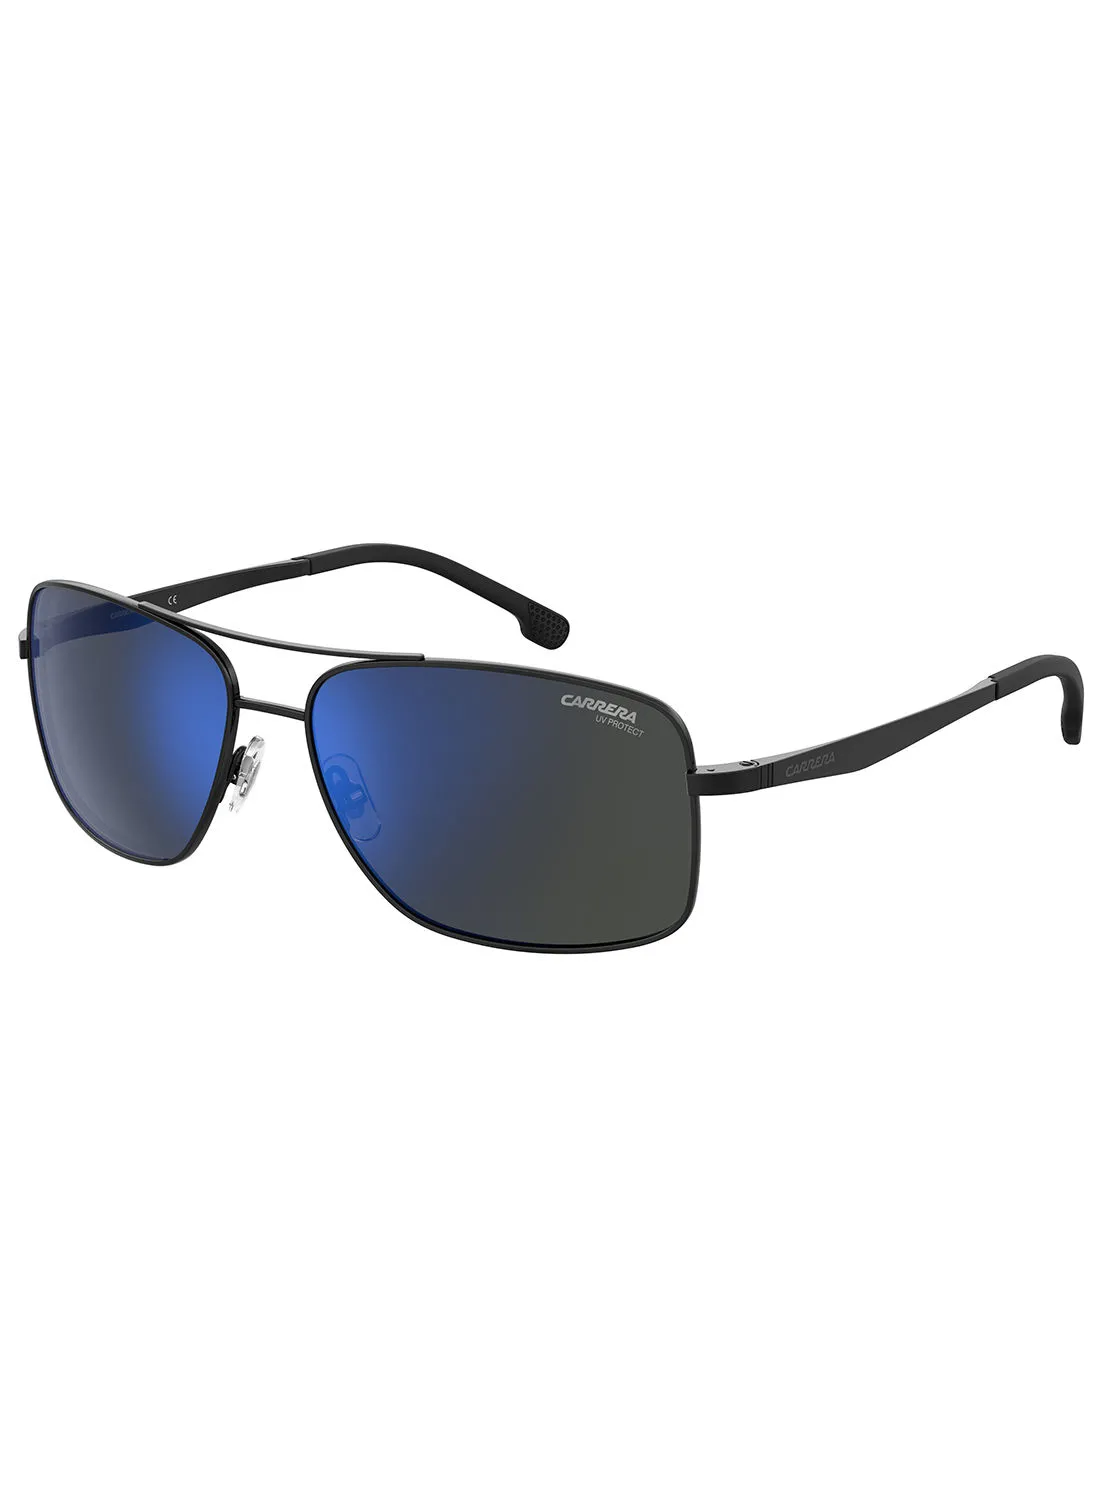 Carrera Men's Pilot Frame Sunglasses - Lens Size: 60 mm